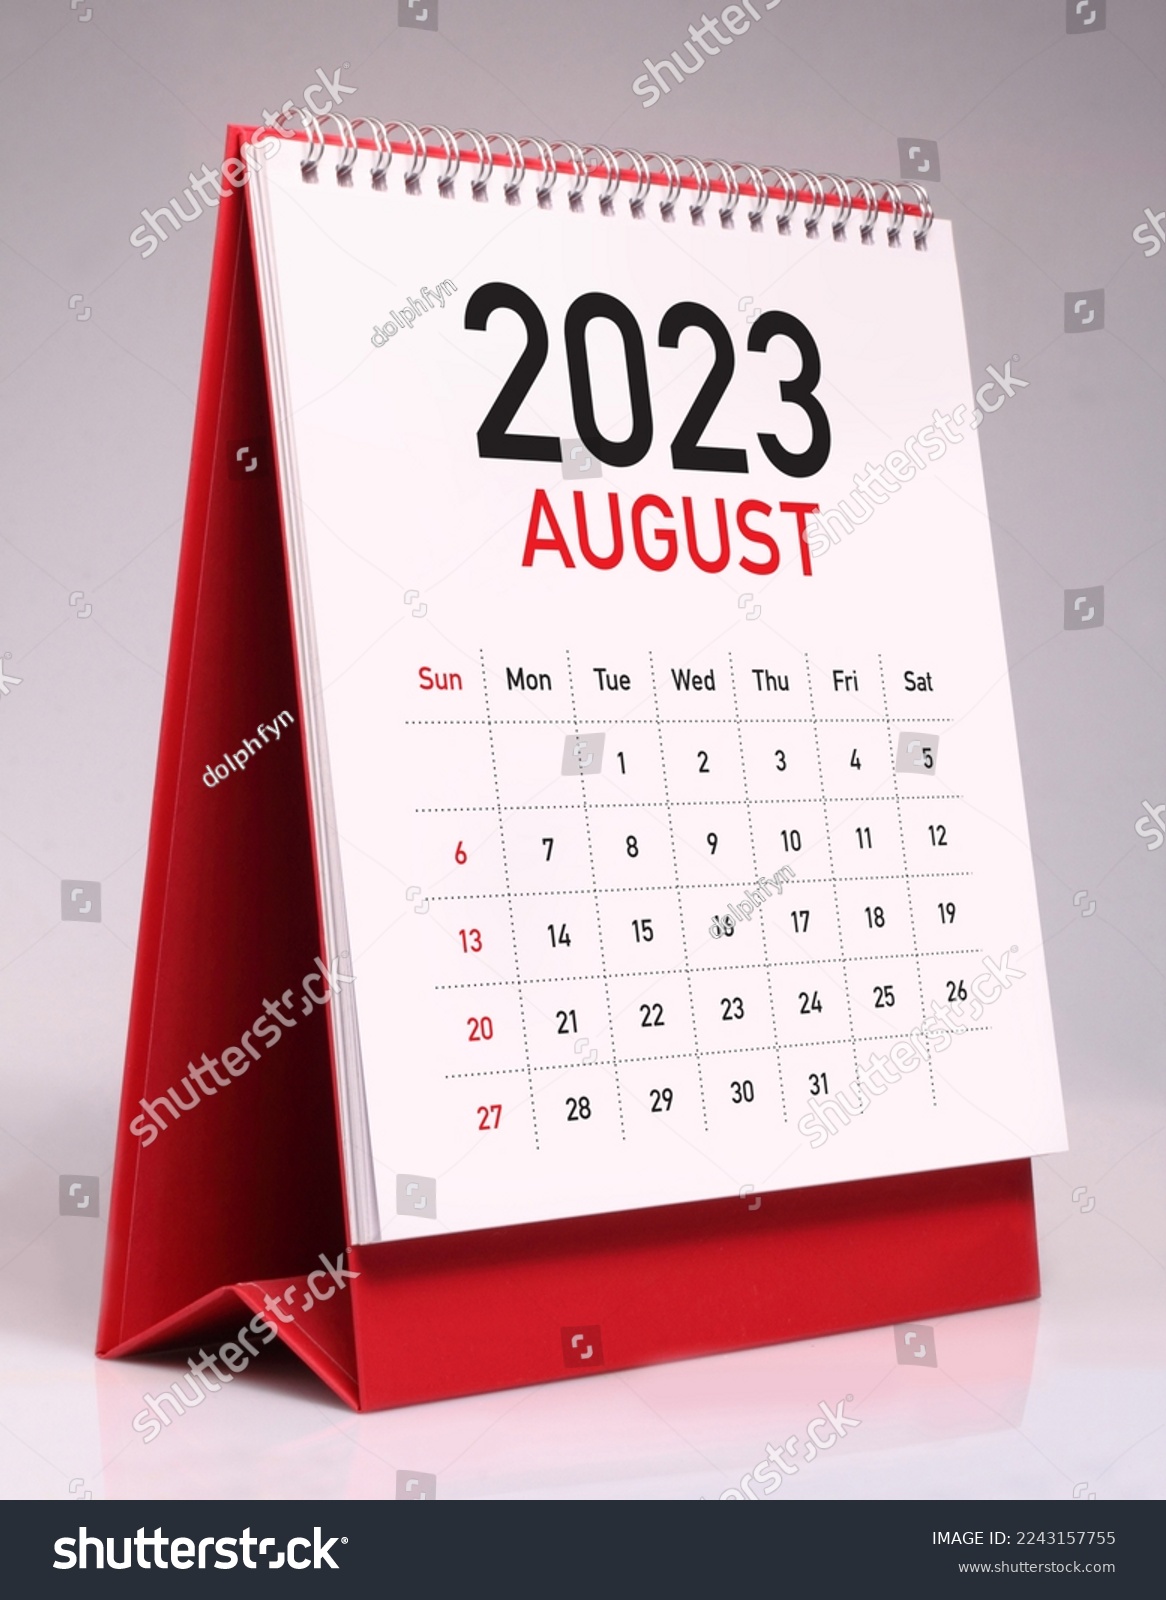 Simple desk calendar for August 2023 #2243157755